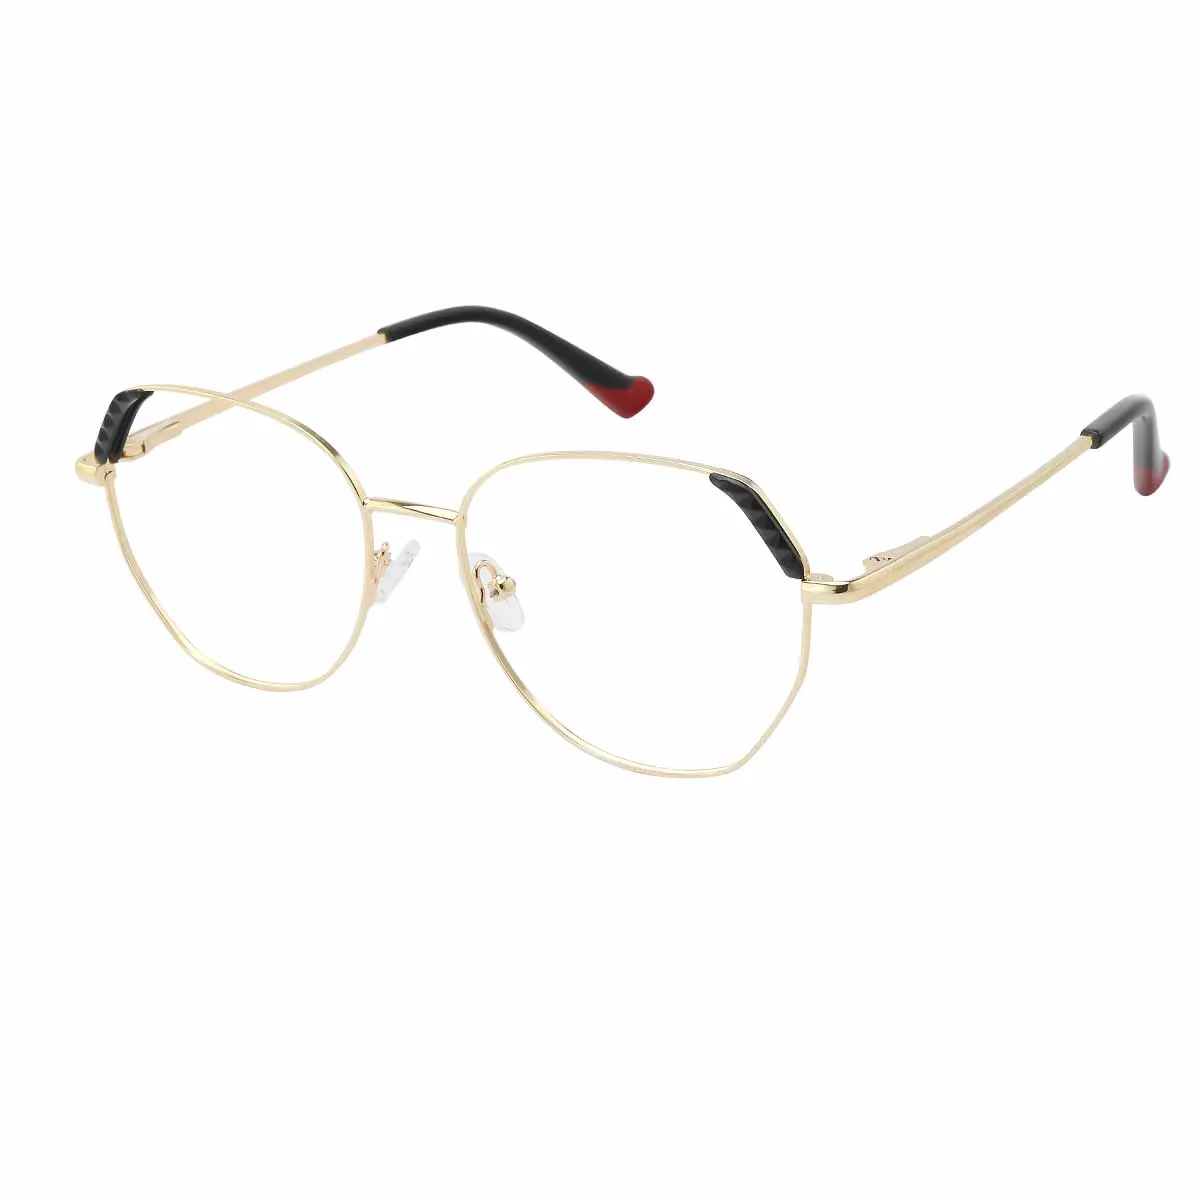 Cora - Geometric Gold/Black Glasses for Women - EFE